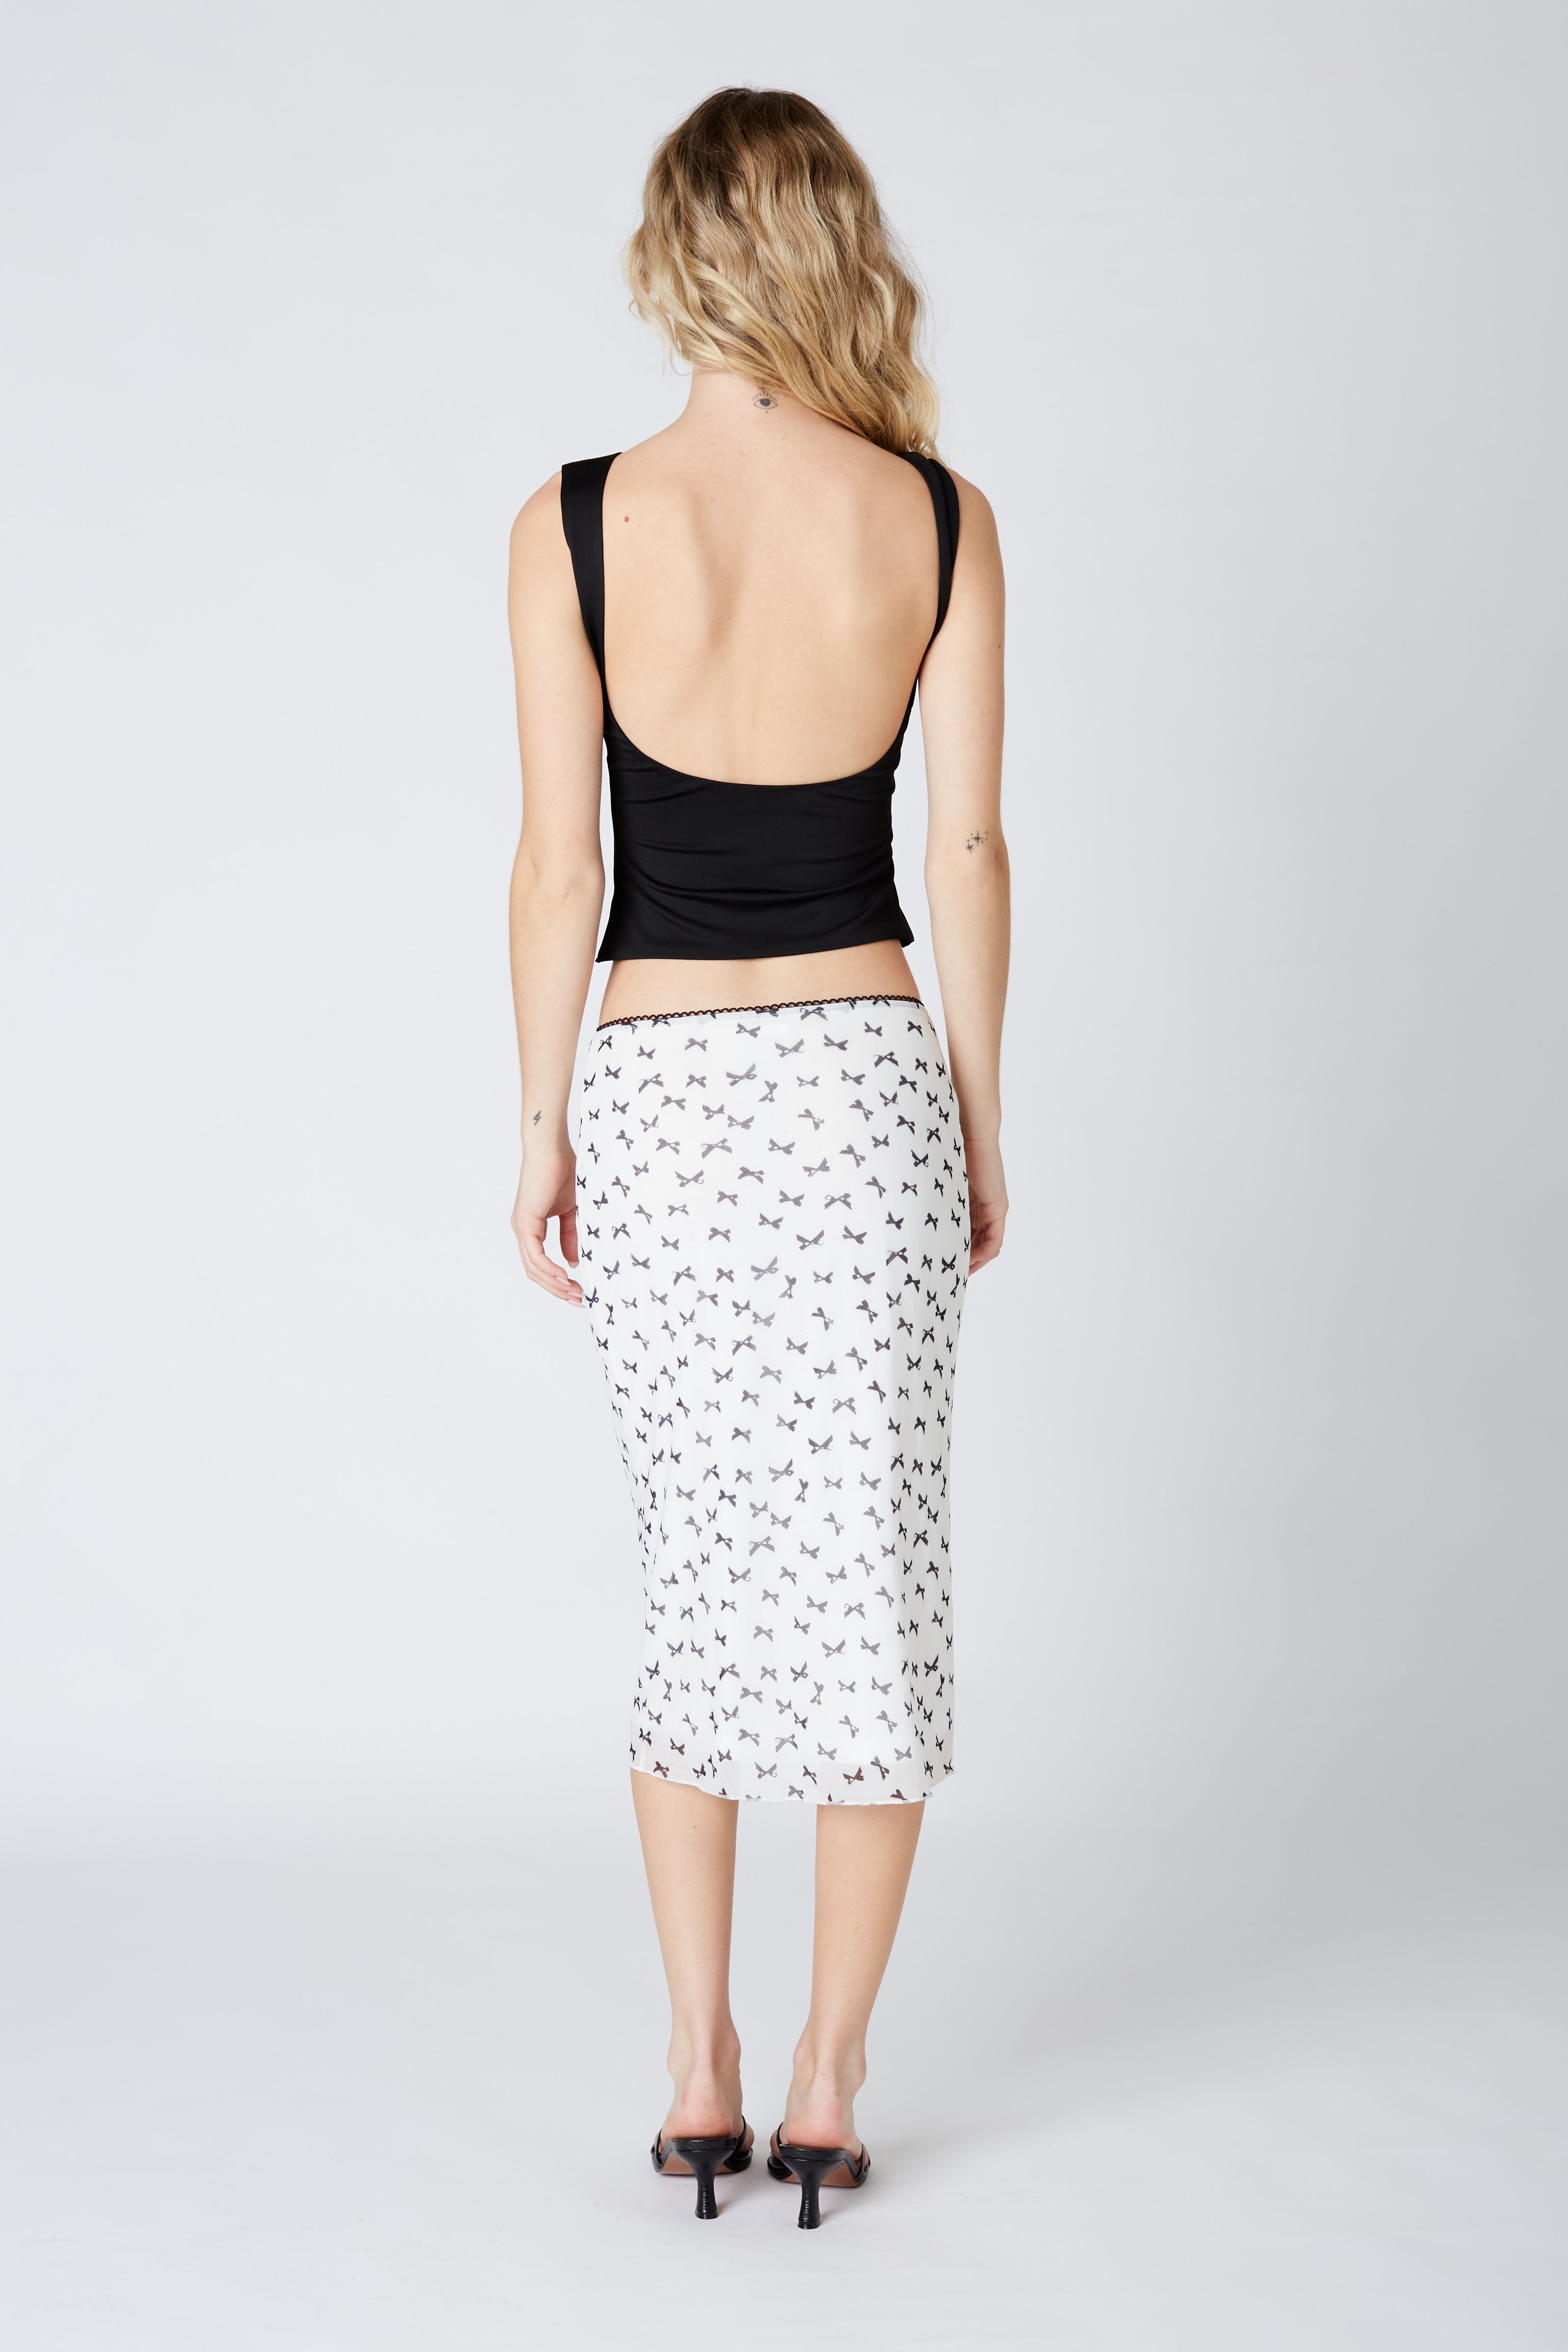 Bow Midi Skirt in White Black Back View